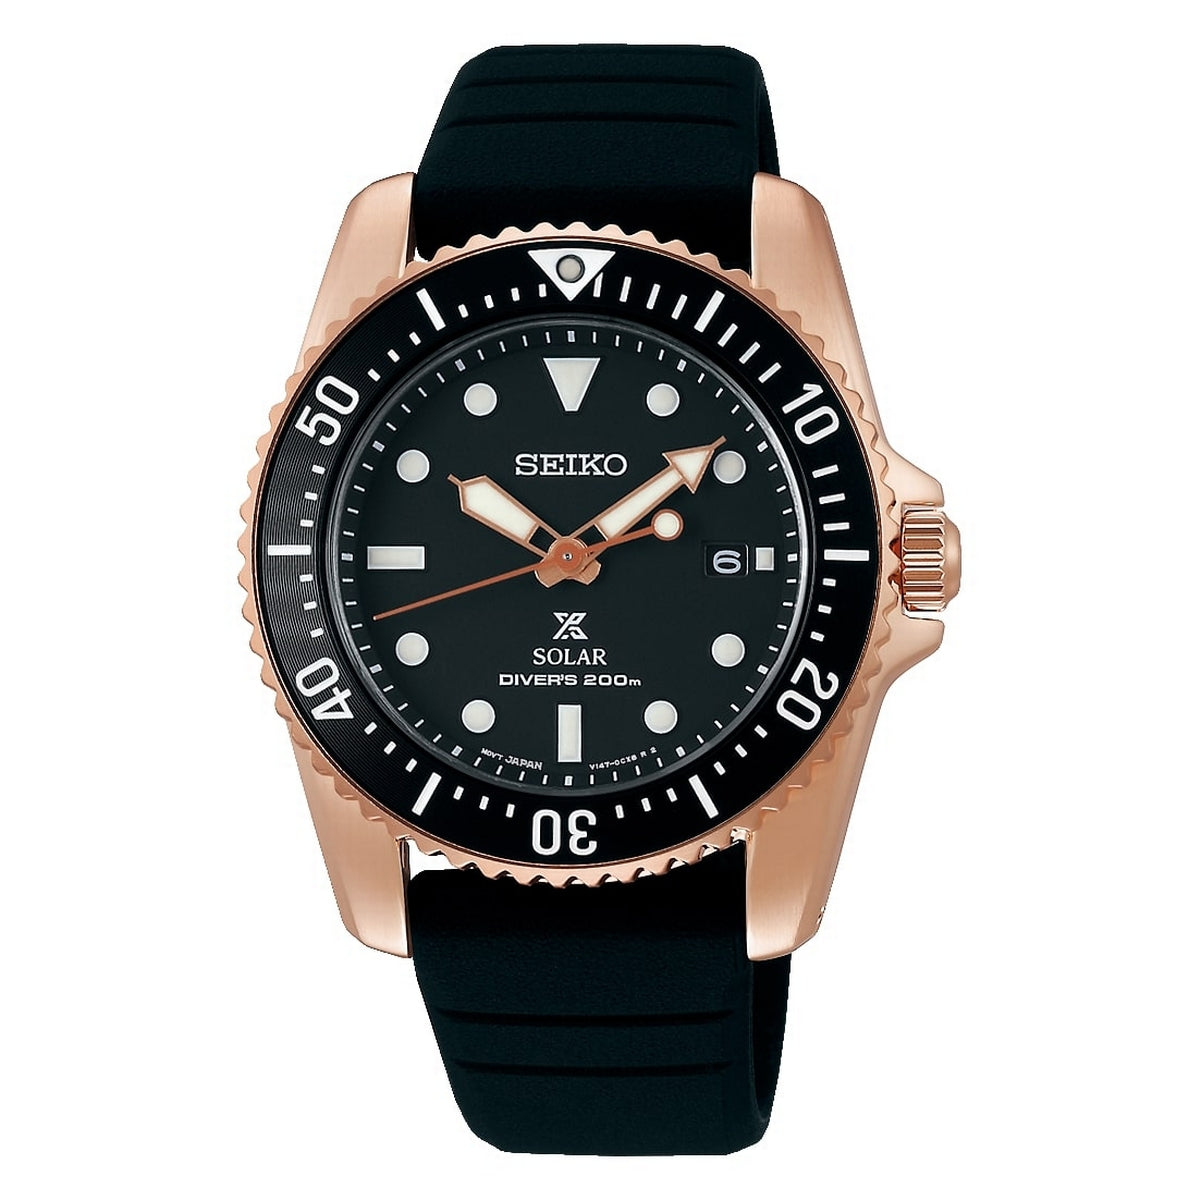 NEW watches online - Seiko Prospex Compact Solar Scuba Diver's Watch